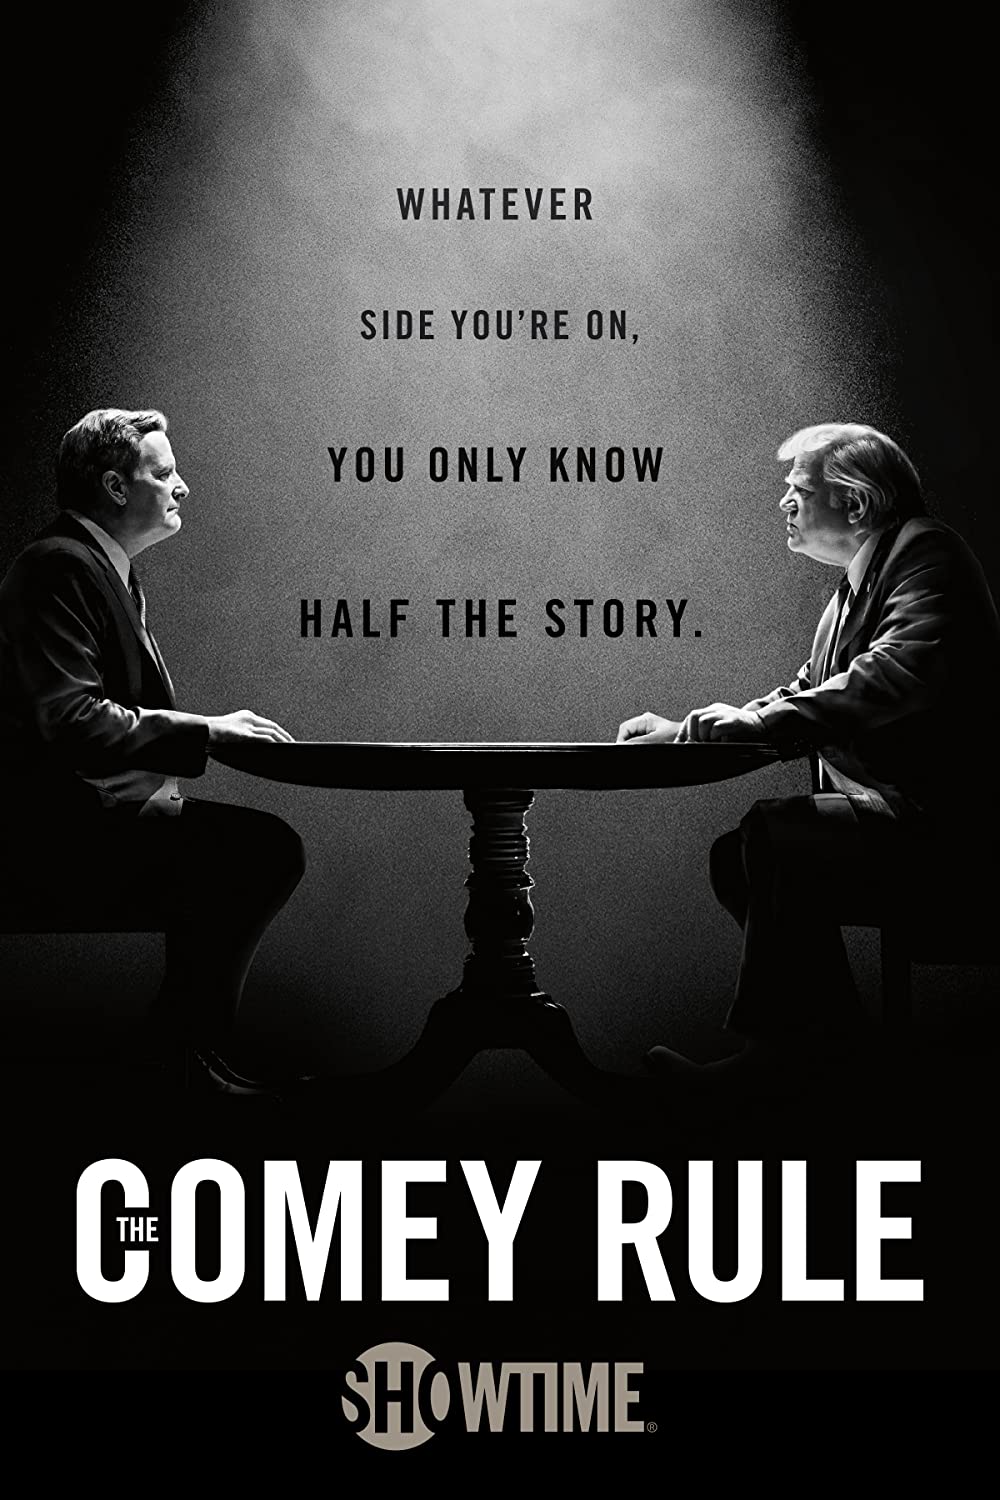 Filmbeschreibung zu The Comey Rule